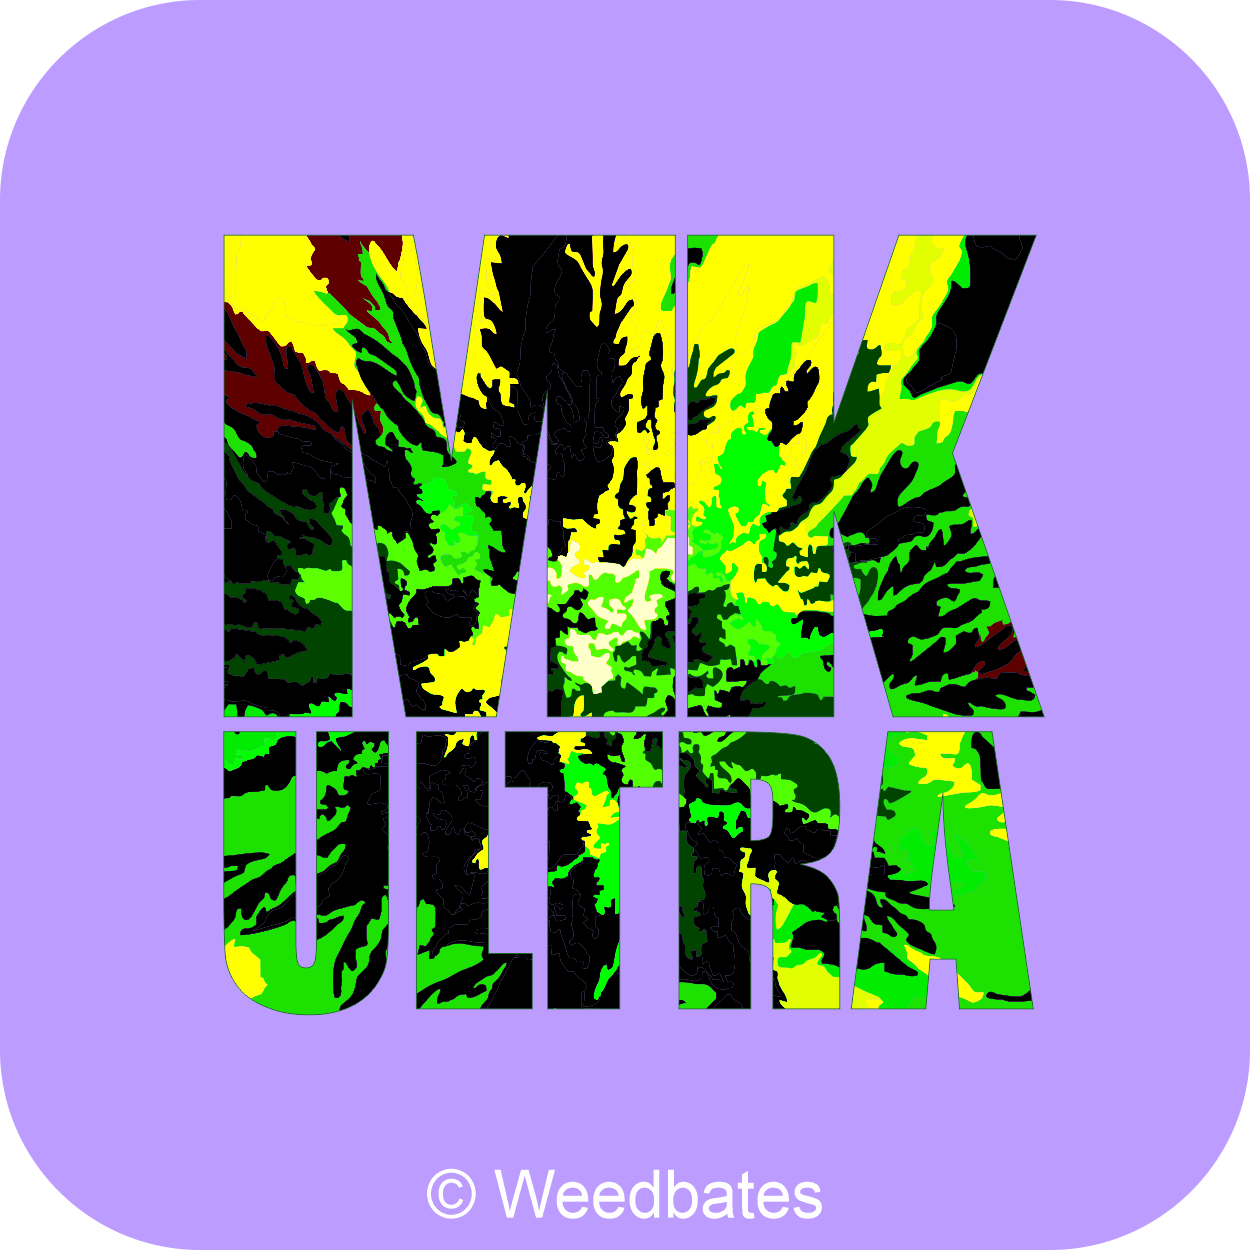 MK Ultra strain